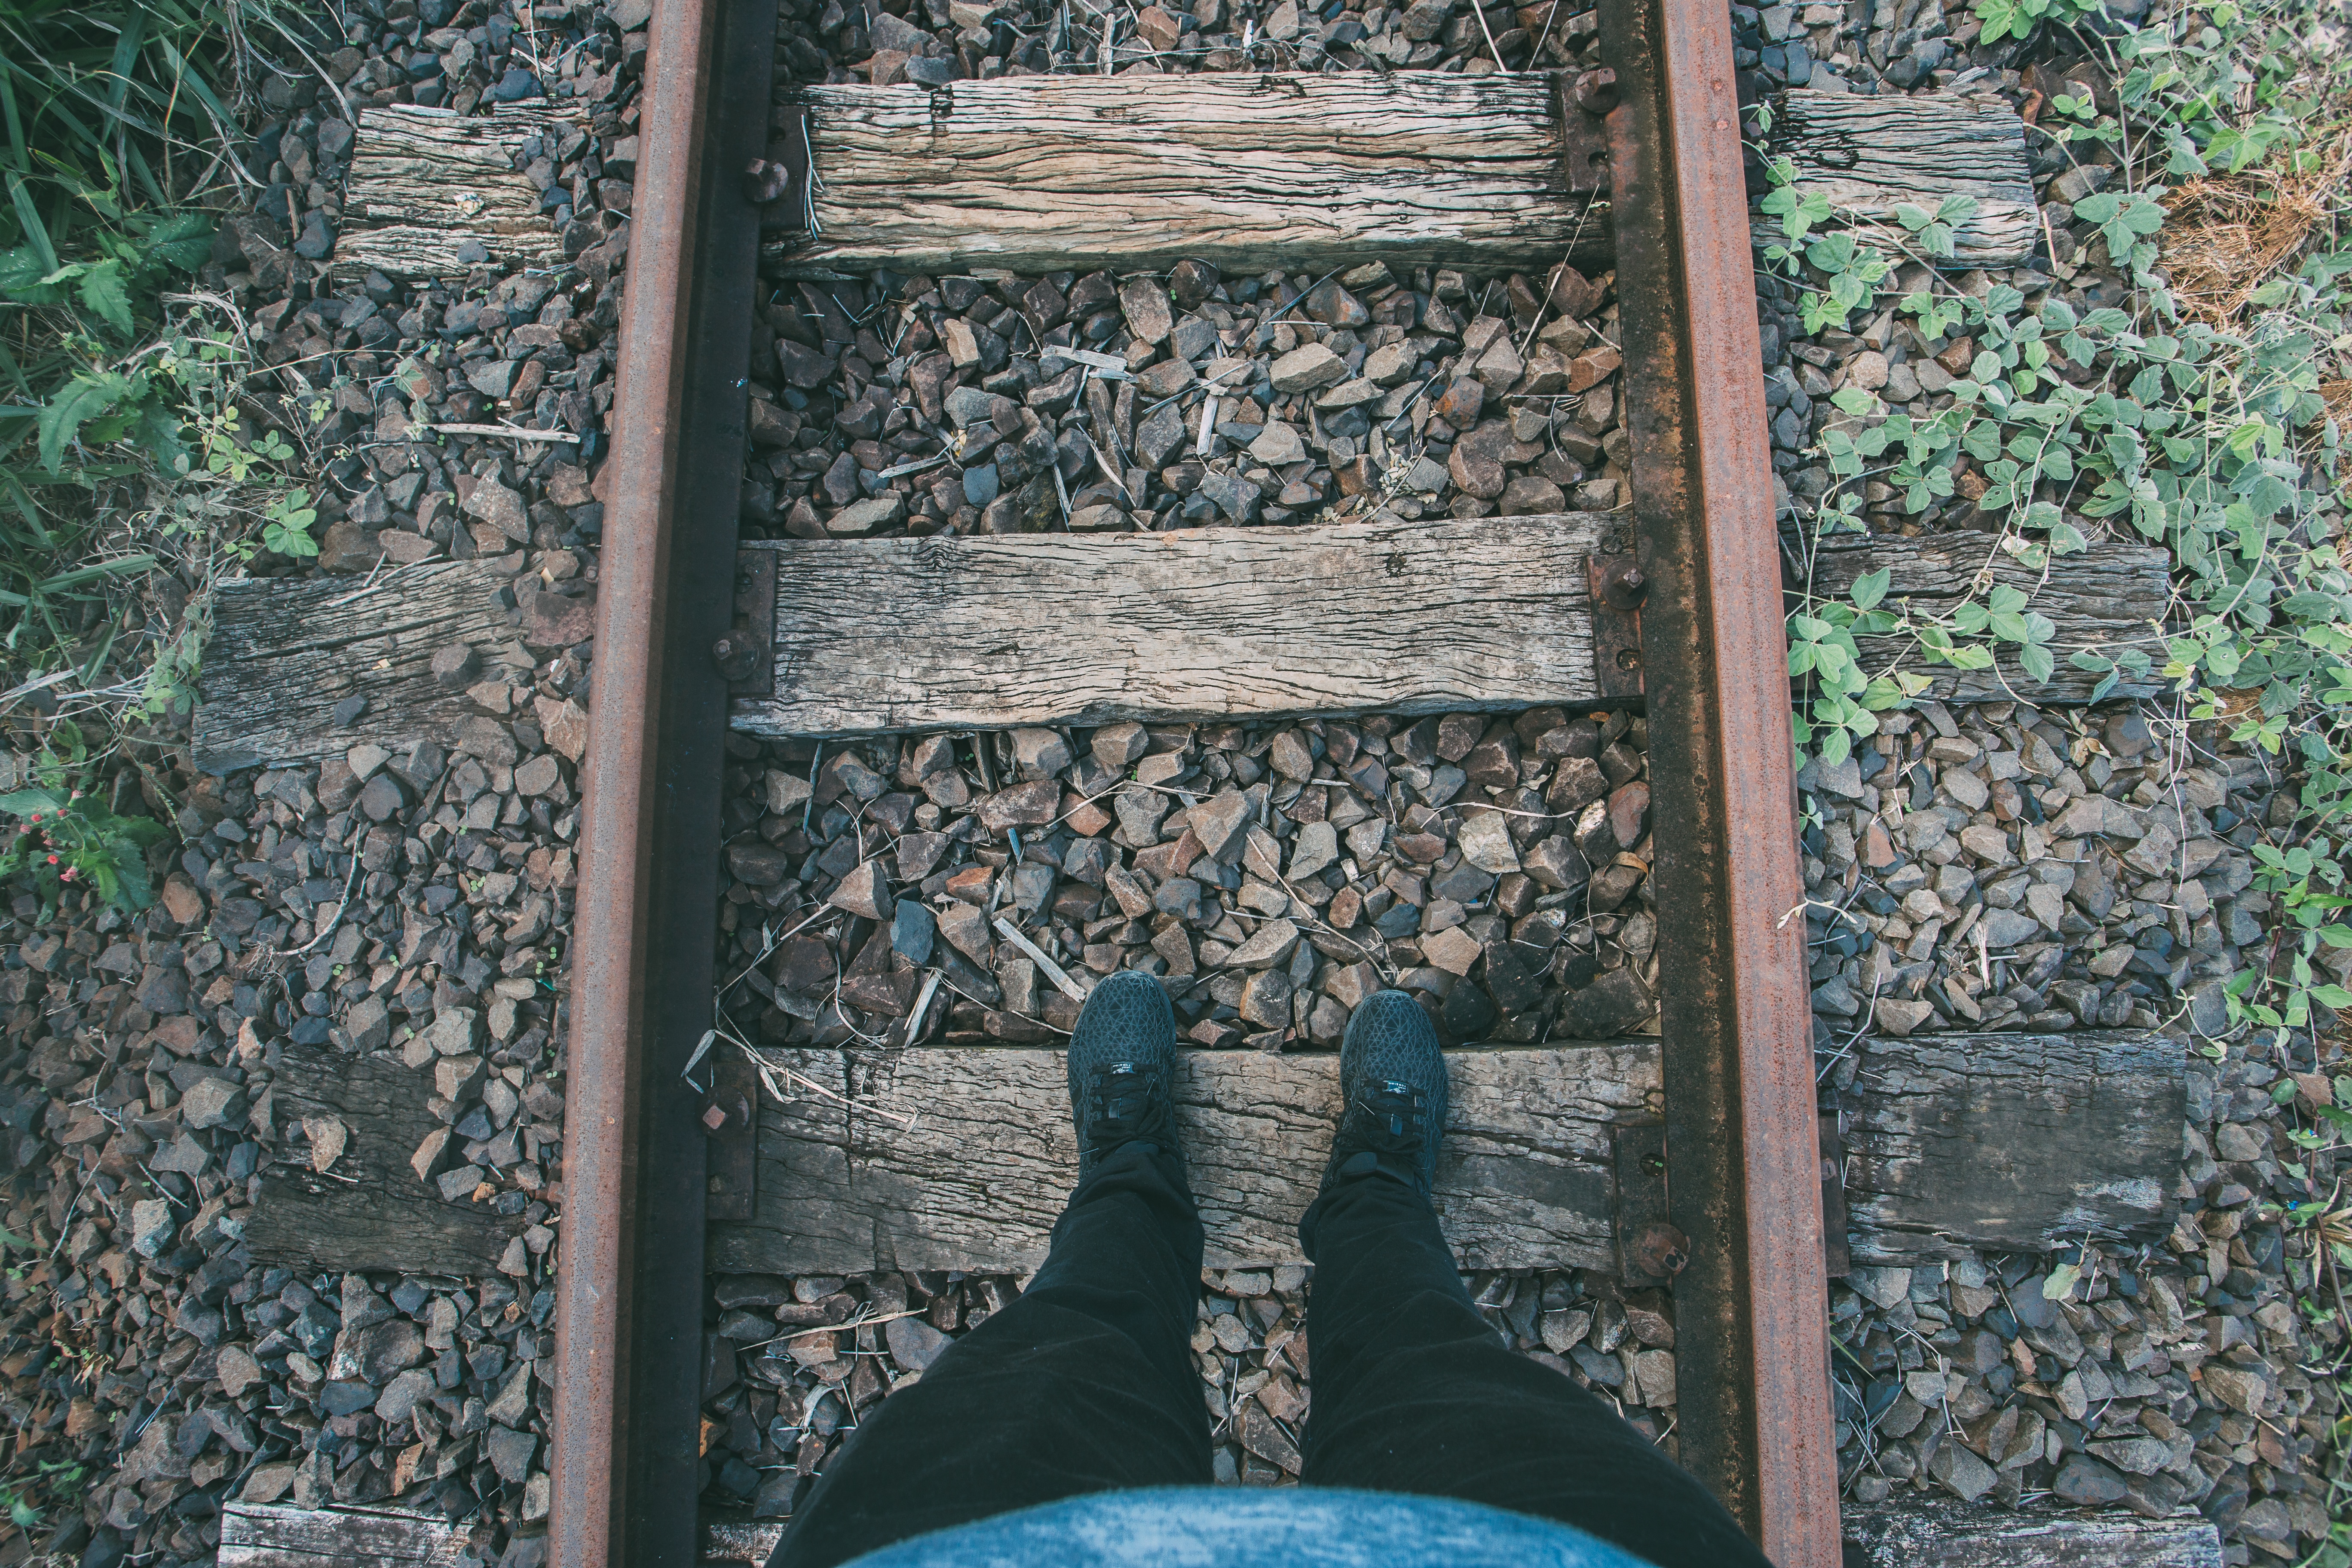 human standing on railways during daytime